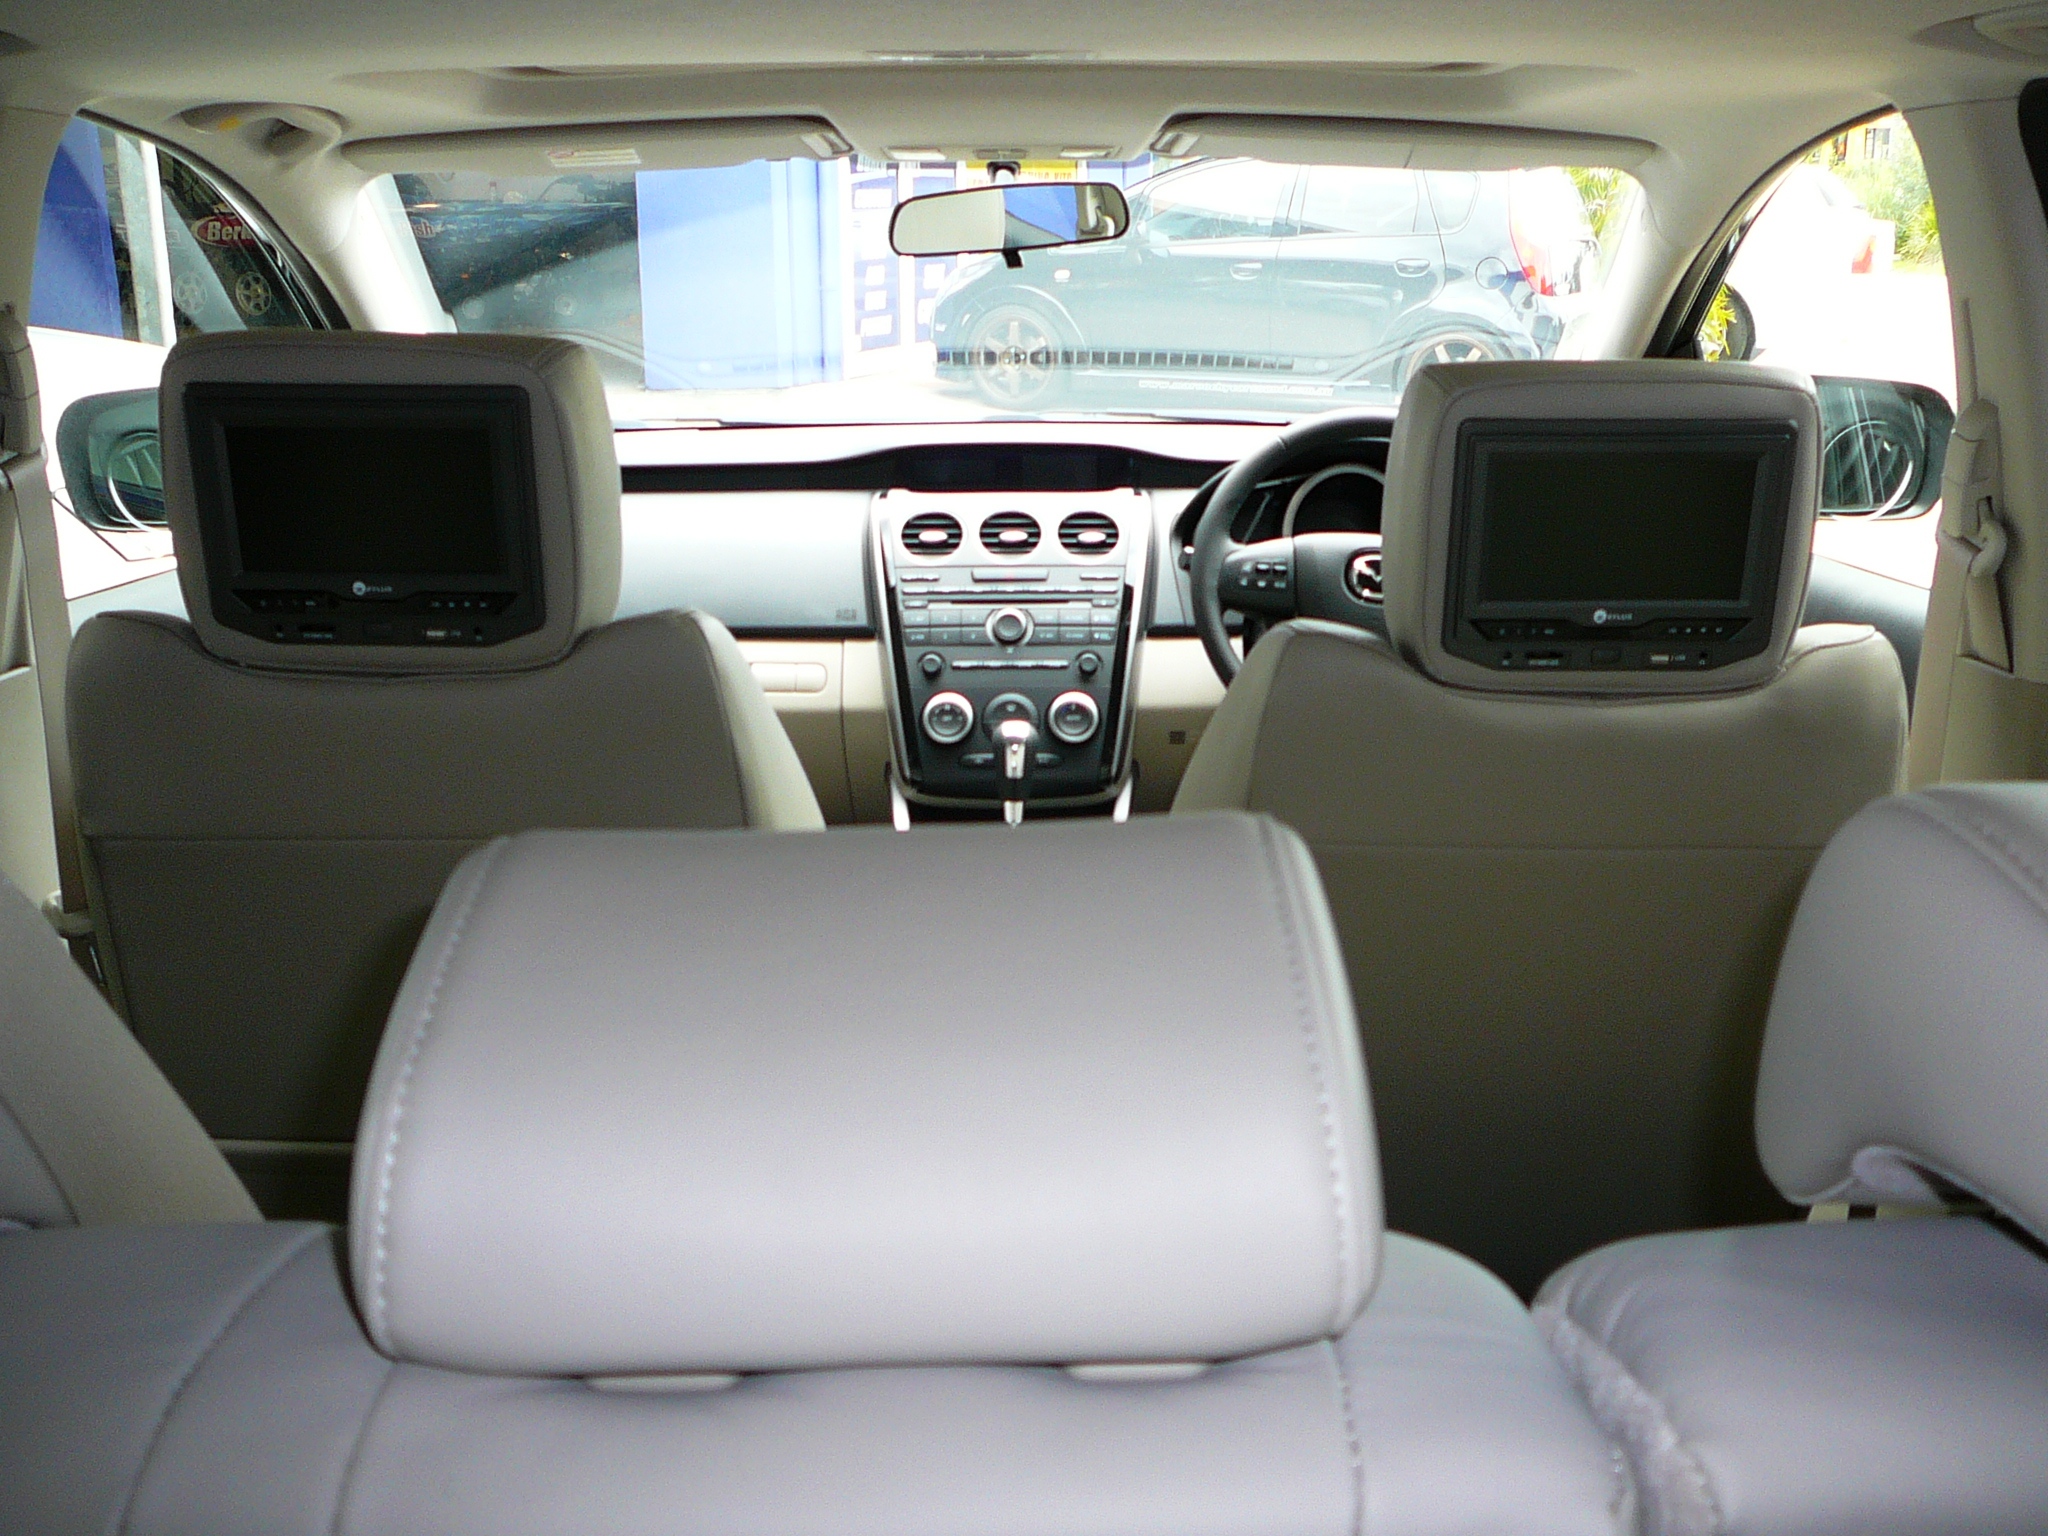 Mazda CX-7 2011, DVD head rest screens